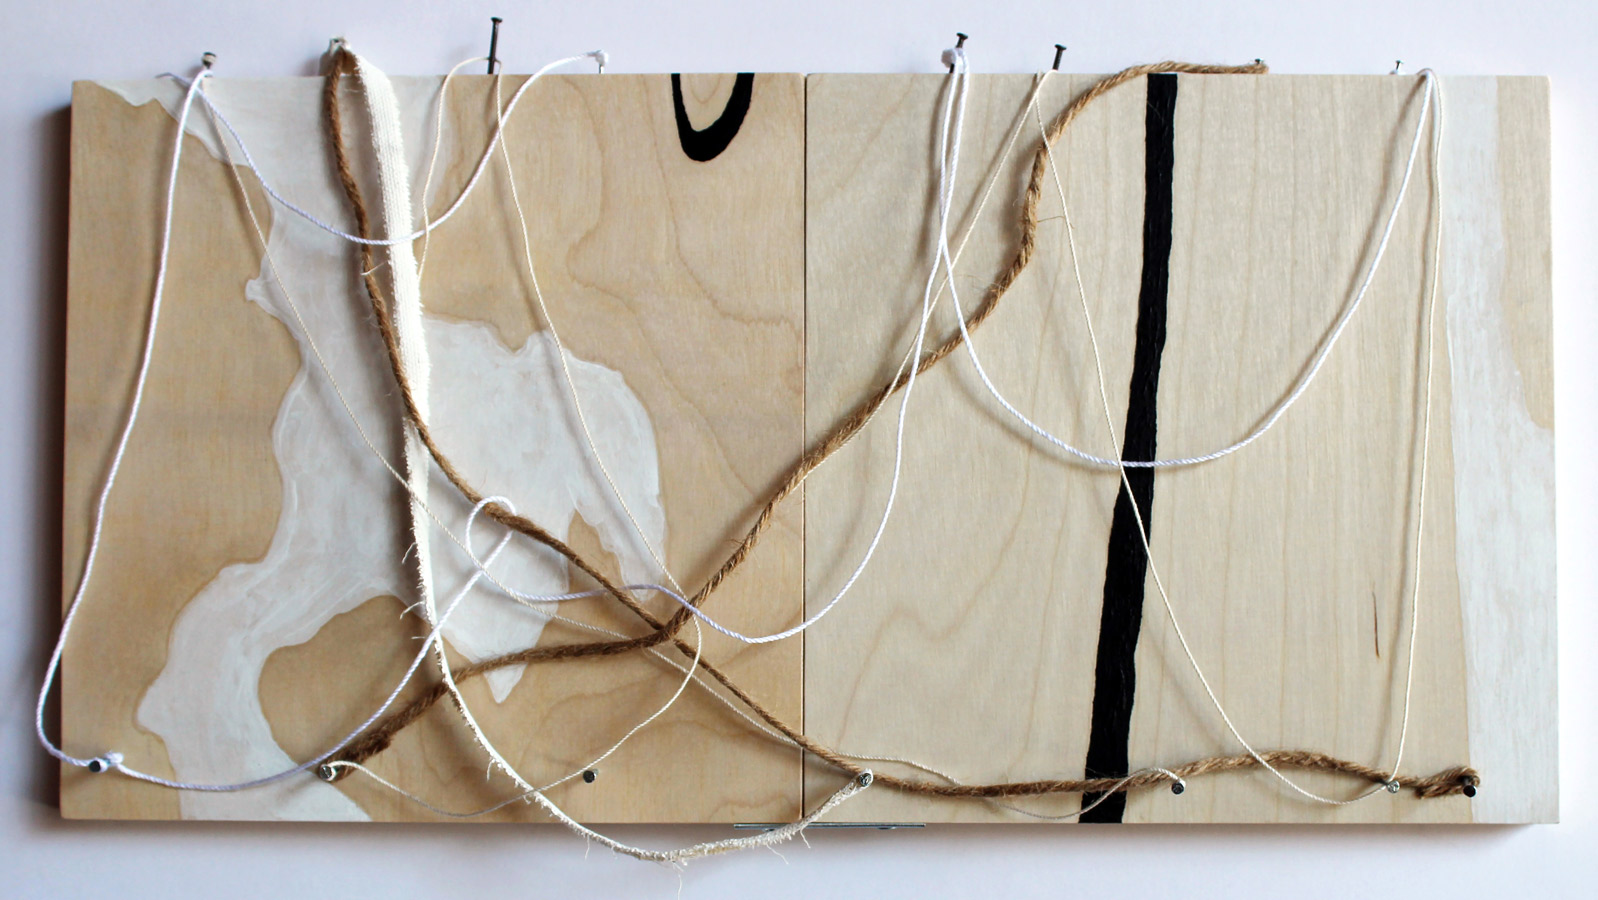 Zelene Schlosberg. Impromptu. Acrylic, Thread, Canvas Piece and Nails on Wood Panels. 20x41x4 cm. 2019